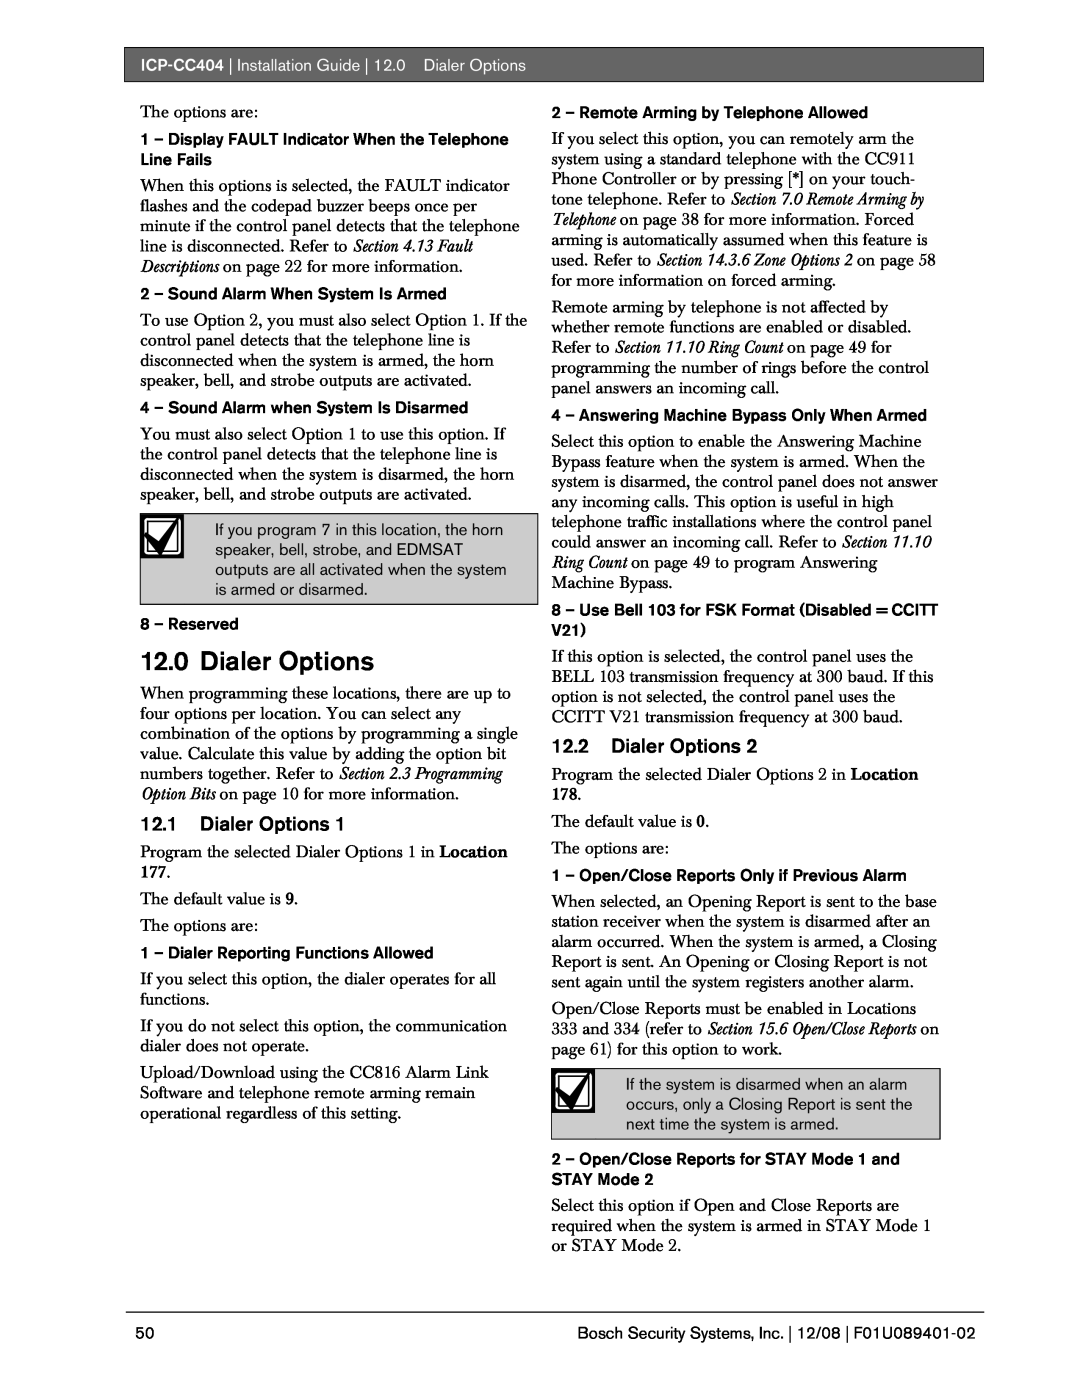 Bosch Appliances ICP-CC404 manual 12.1Dialer Options, 12.2Dialer Options 